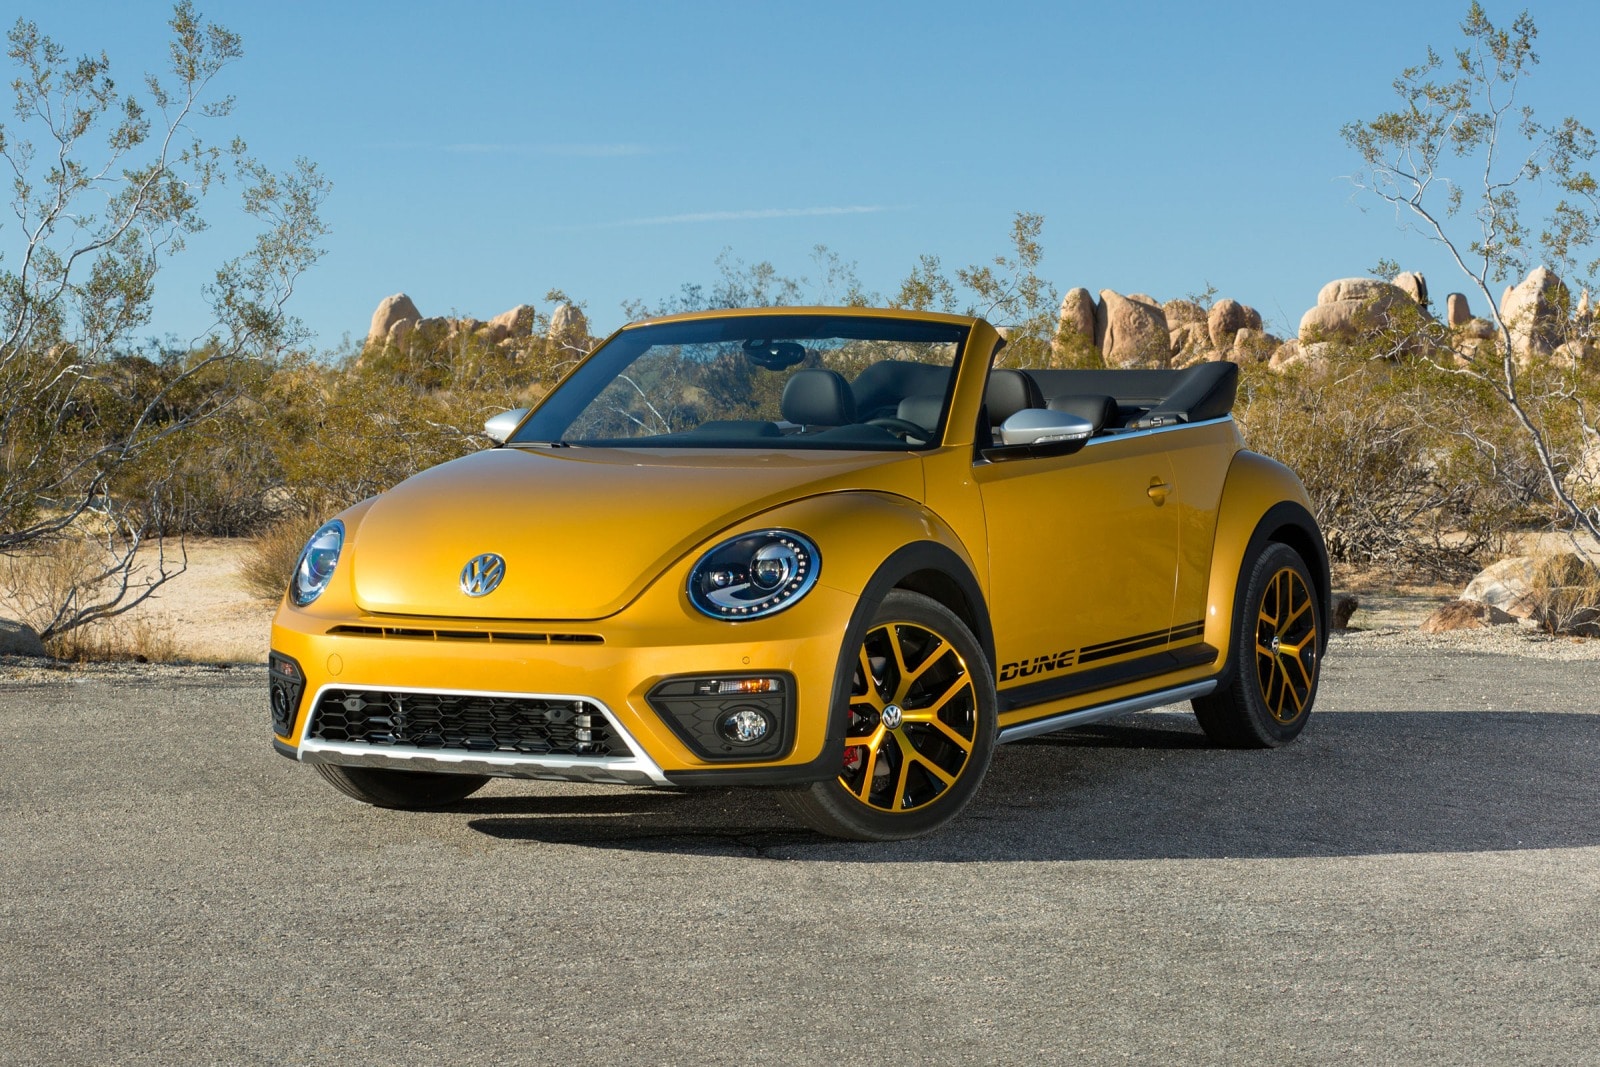 2018 Volkswagen Beetle Convertible Review & Ratings | Edmunds